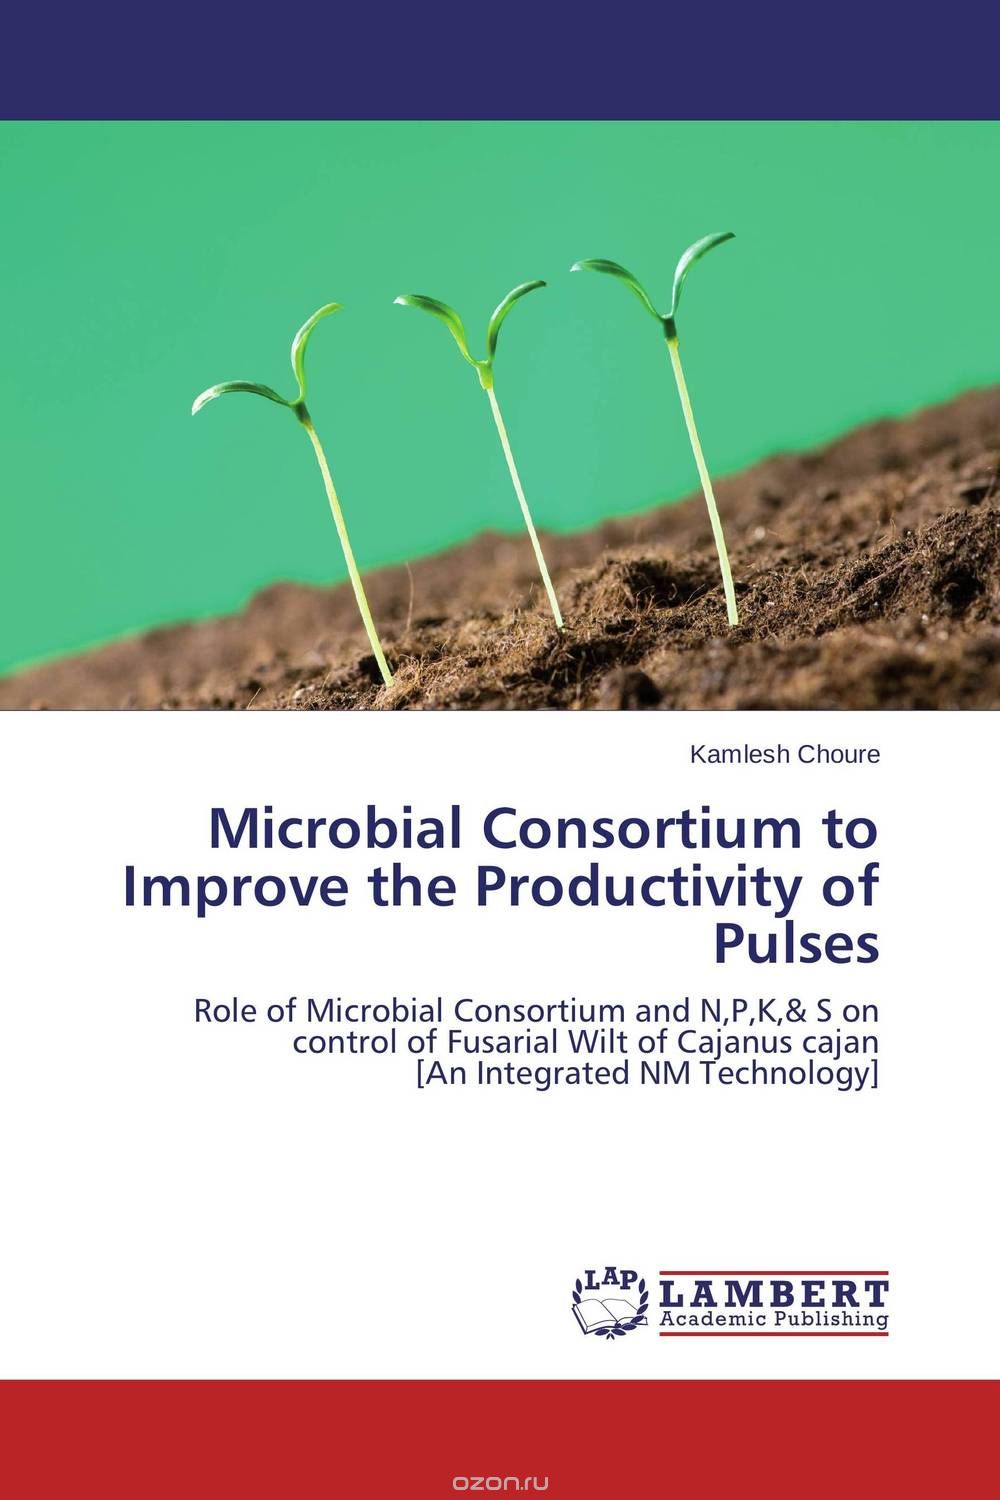 Скачать книгу "Microbial Consortium to Improve the Productivity of Pulses"